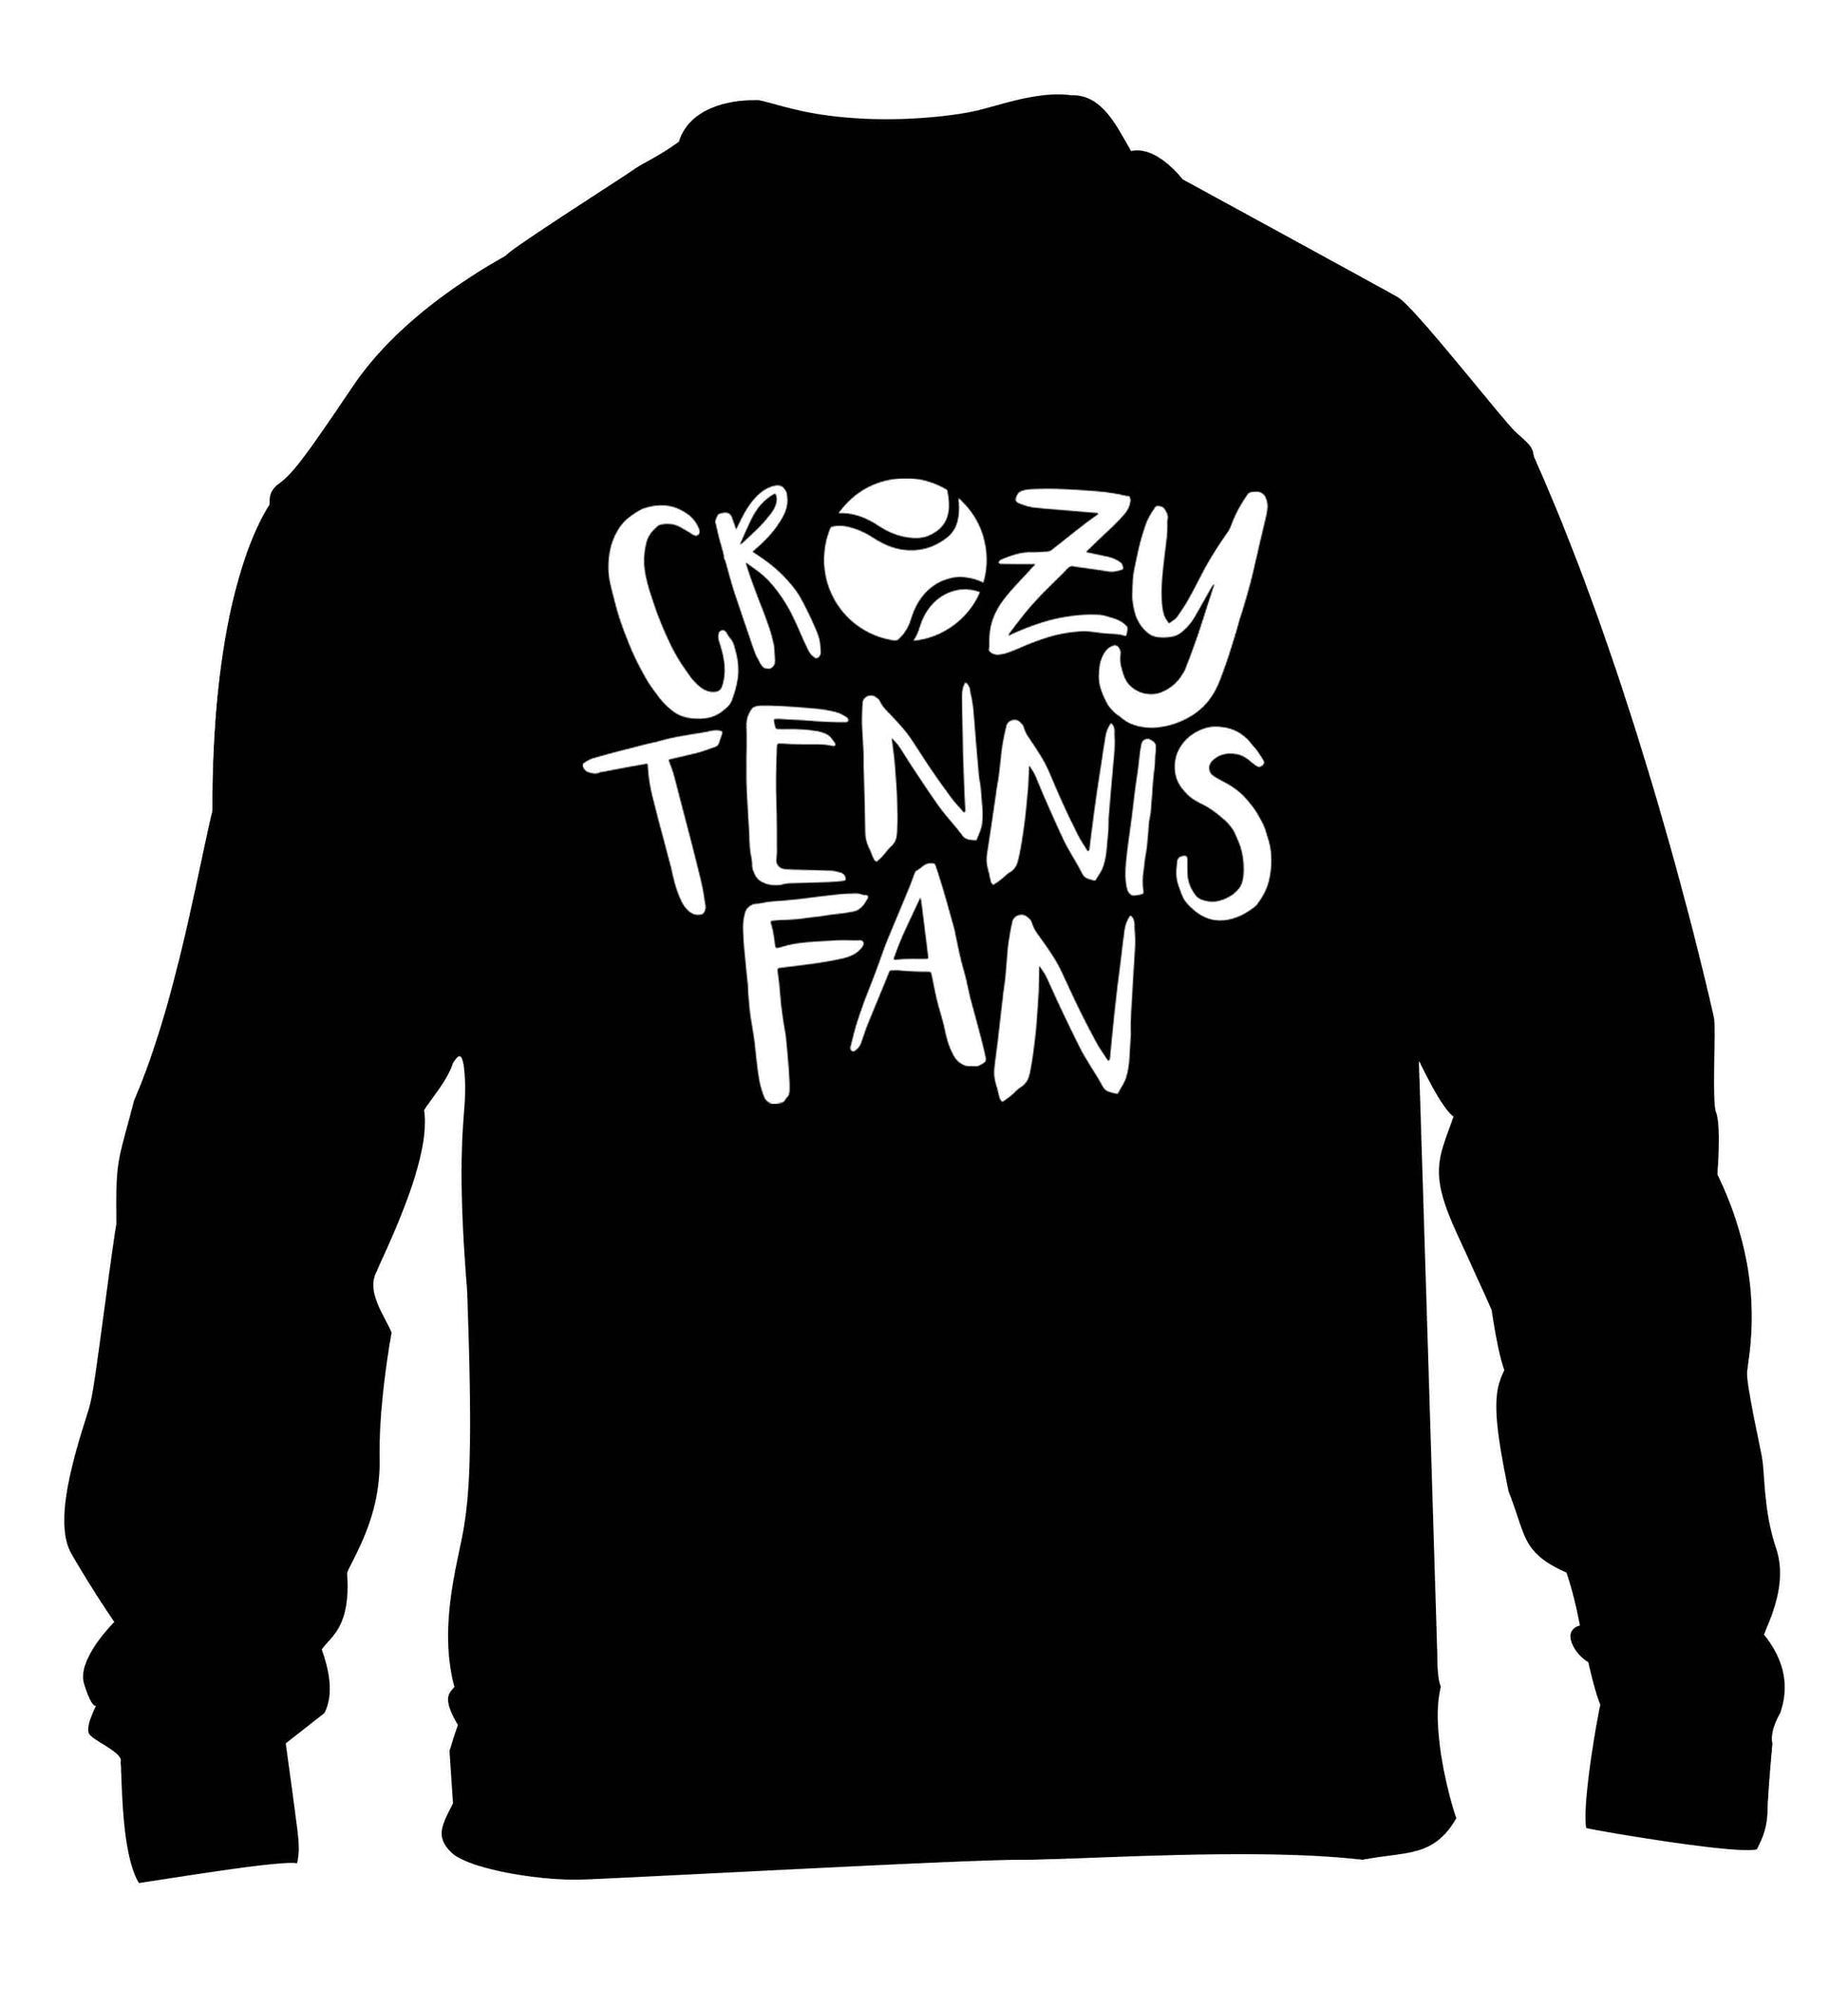 Crazy tennis fan children's black sweater 12-13 Years